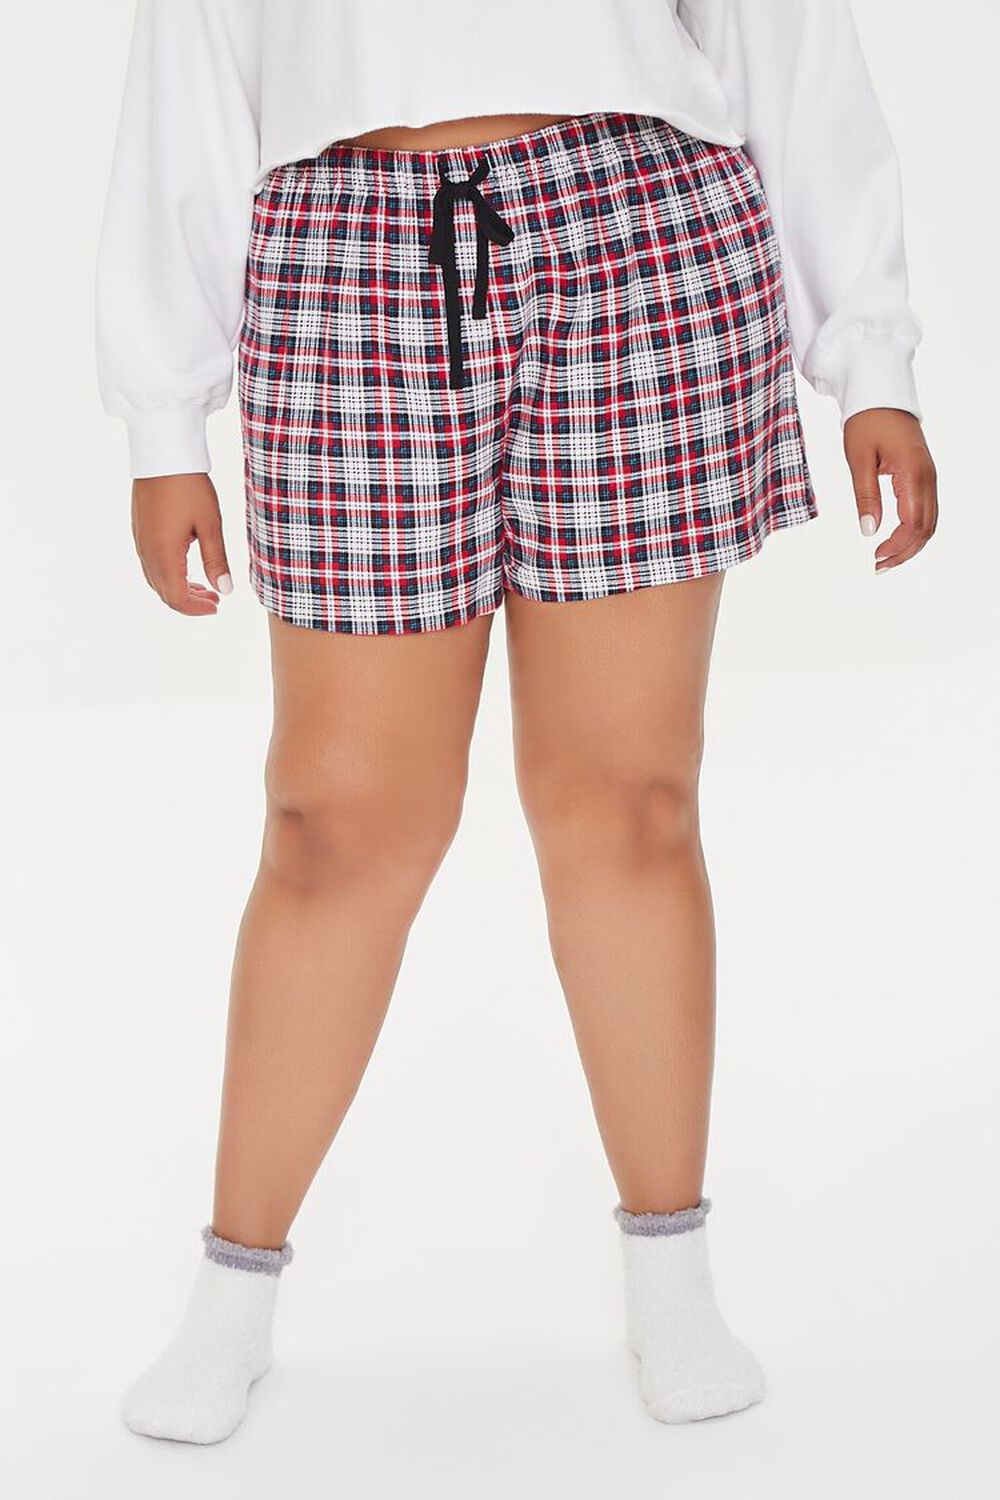 RED/MULTI Plus Size Plaid Flannel Pajama Shorts, image 2